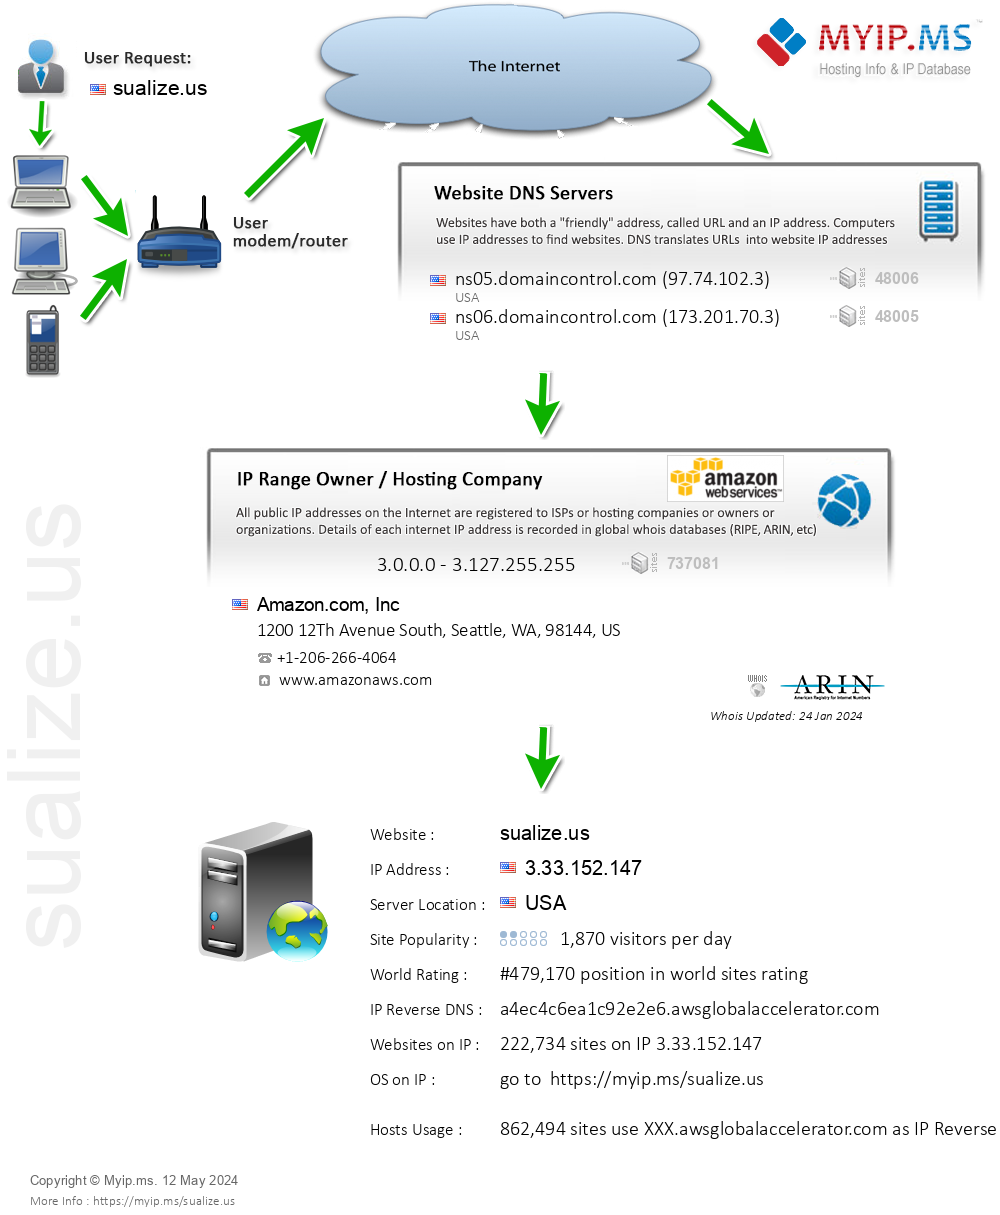 Sualize.us - Website Hosting Visual IP Diagram